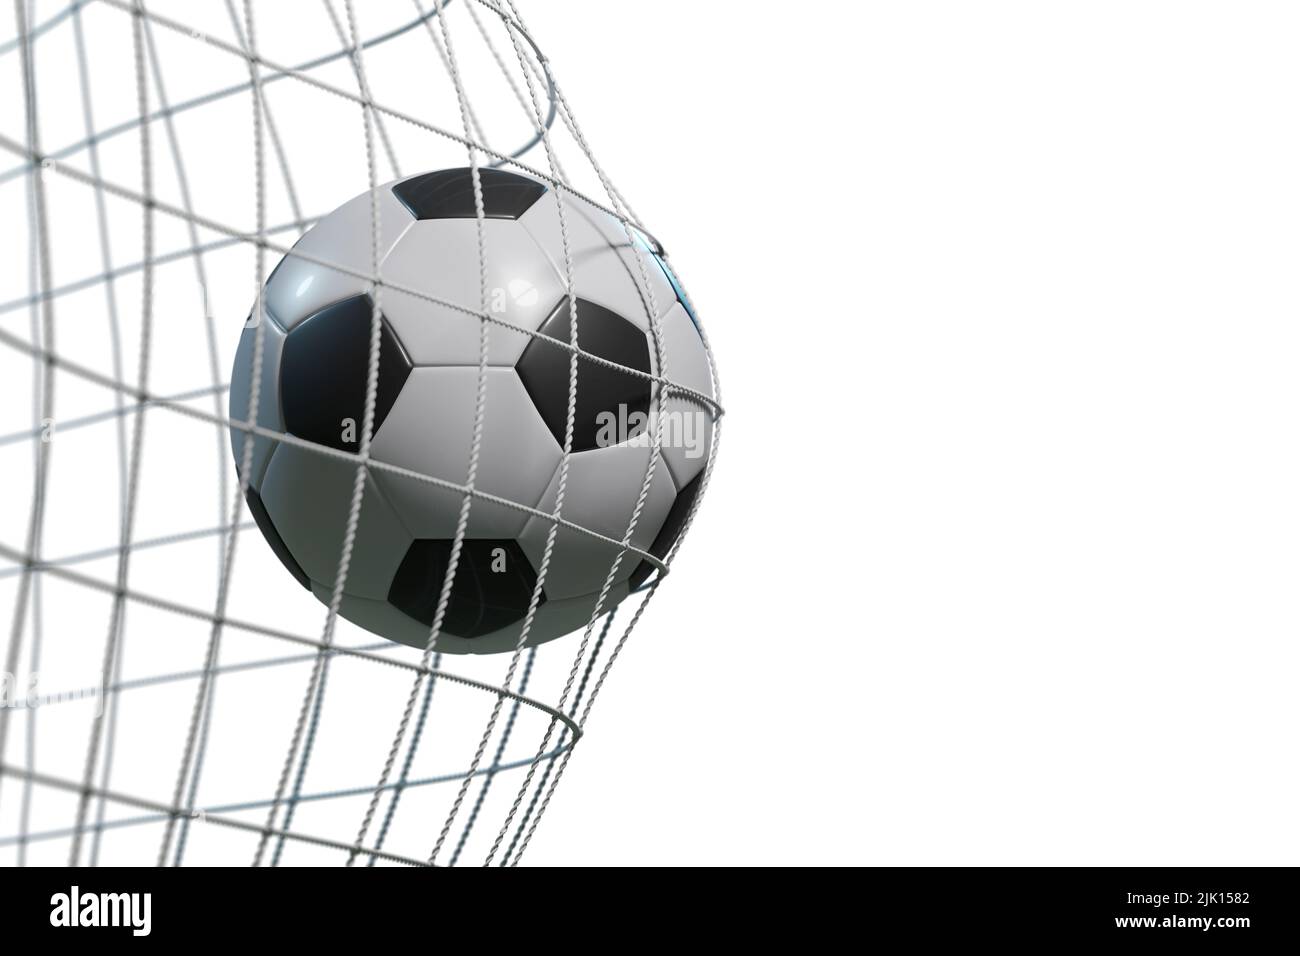 40+ Soccer Net White Background Stock Illustrations, Royalty-Free